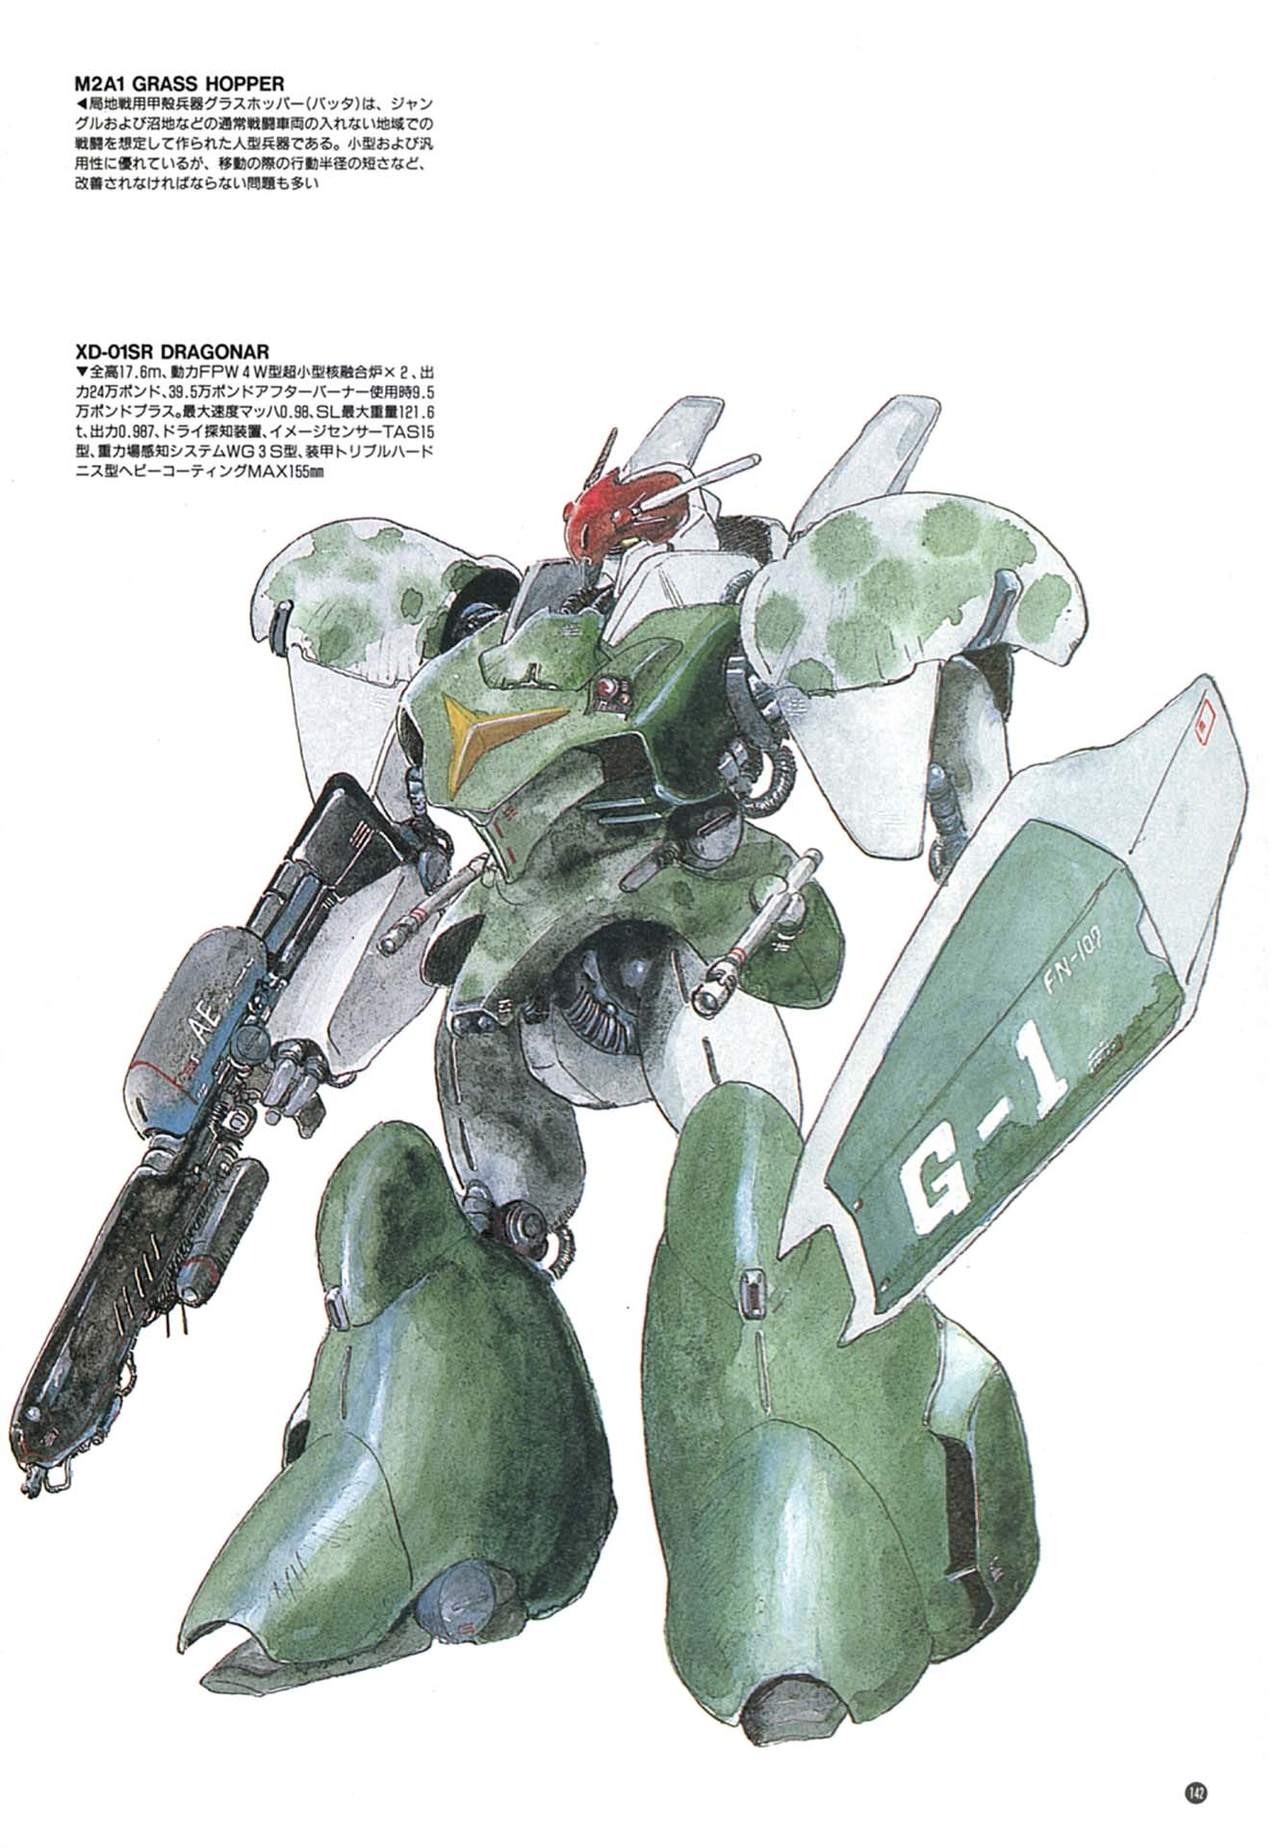 [Kazuhisa Kondo] Kazuhisa Kondo 2D & 3D Works - Go Ahead - From Mobile Suit Gundam to Original Mechanism 141